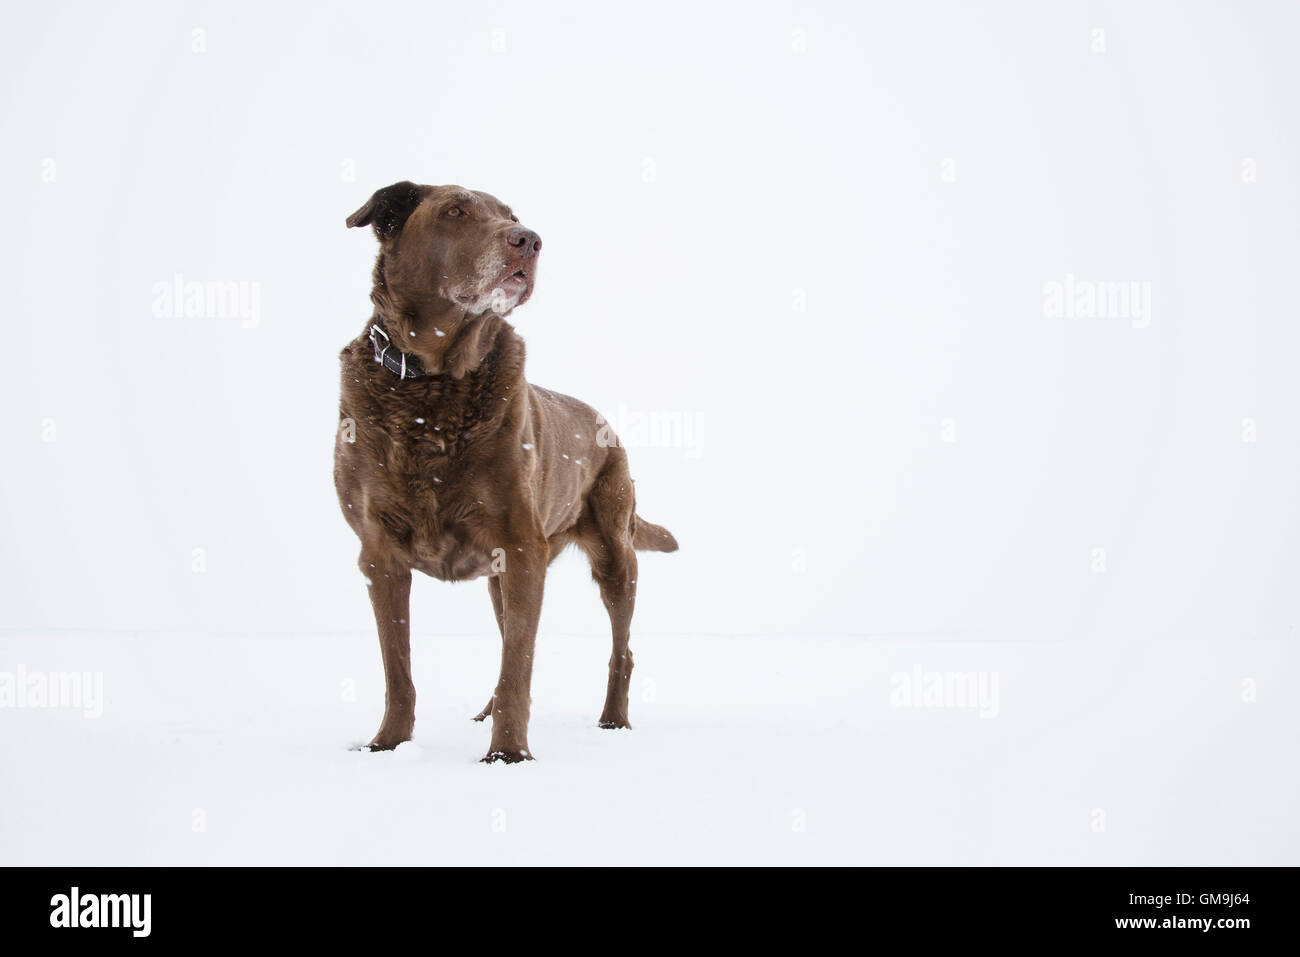 Dog standing on snow Stock Photo